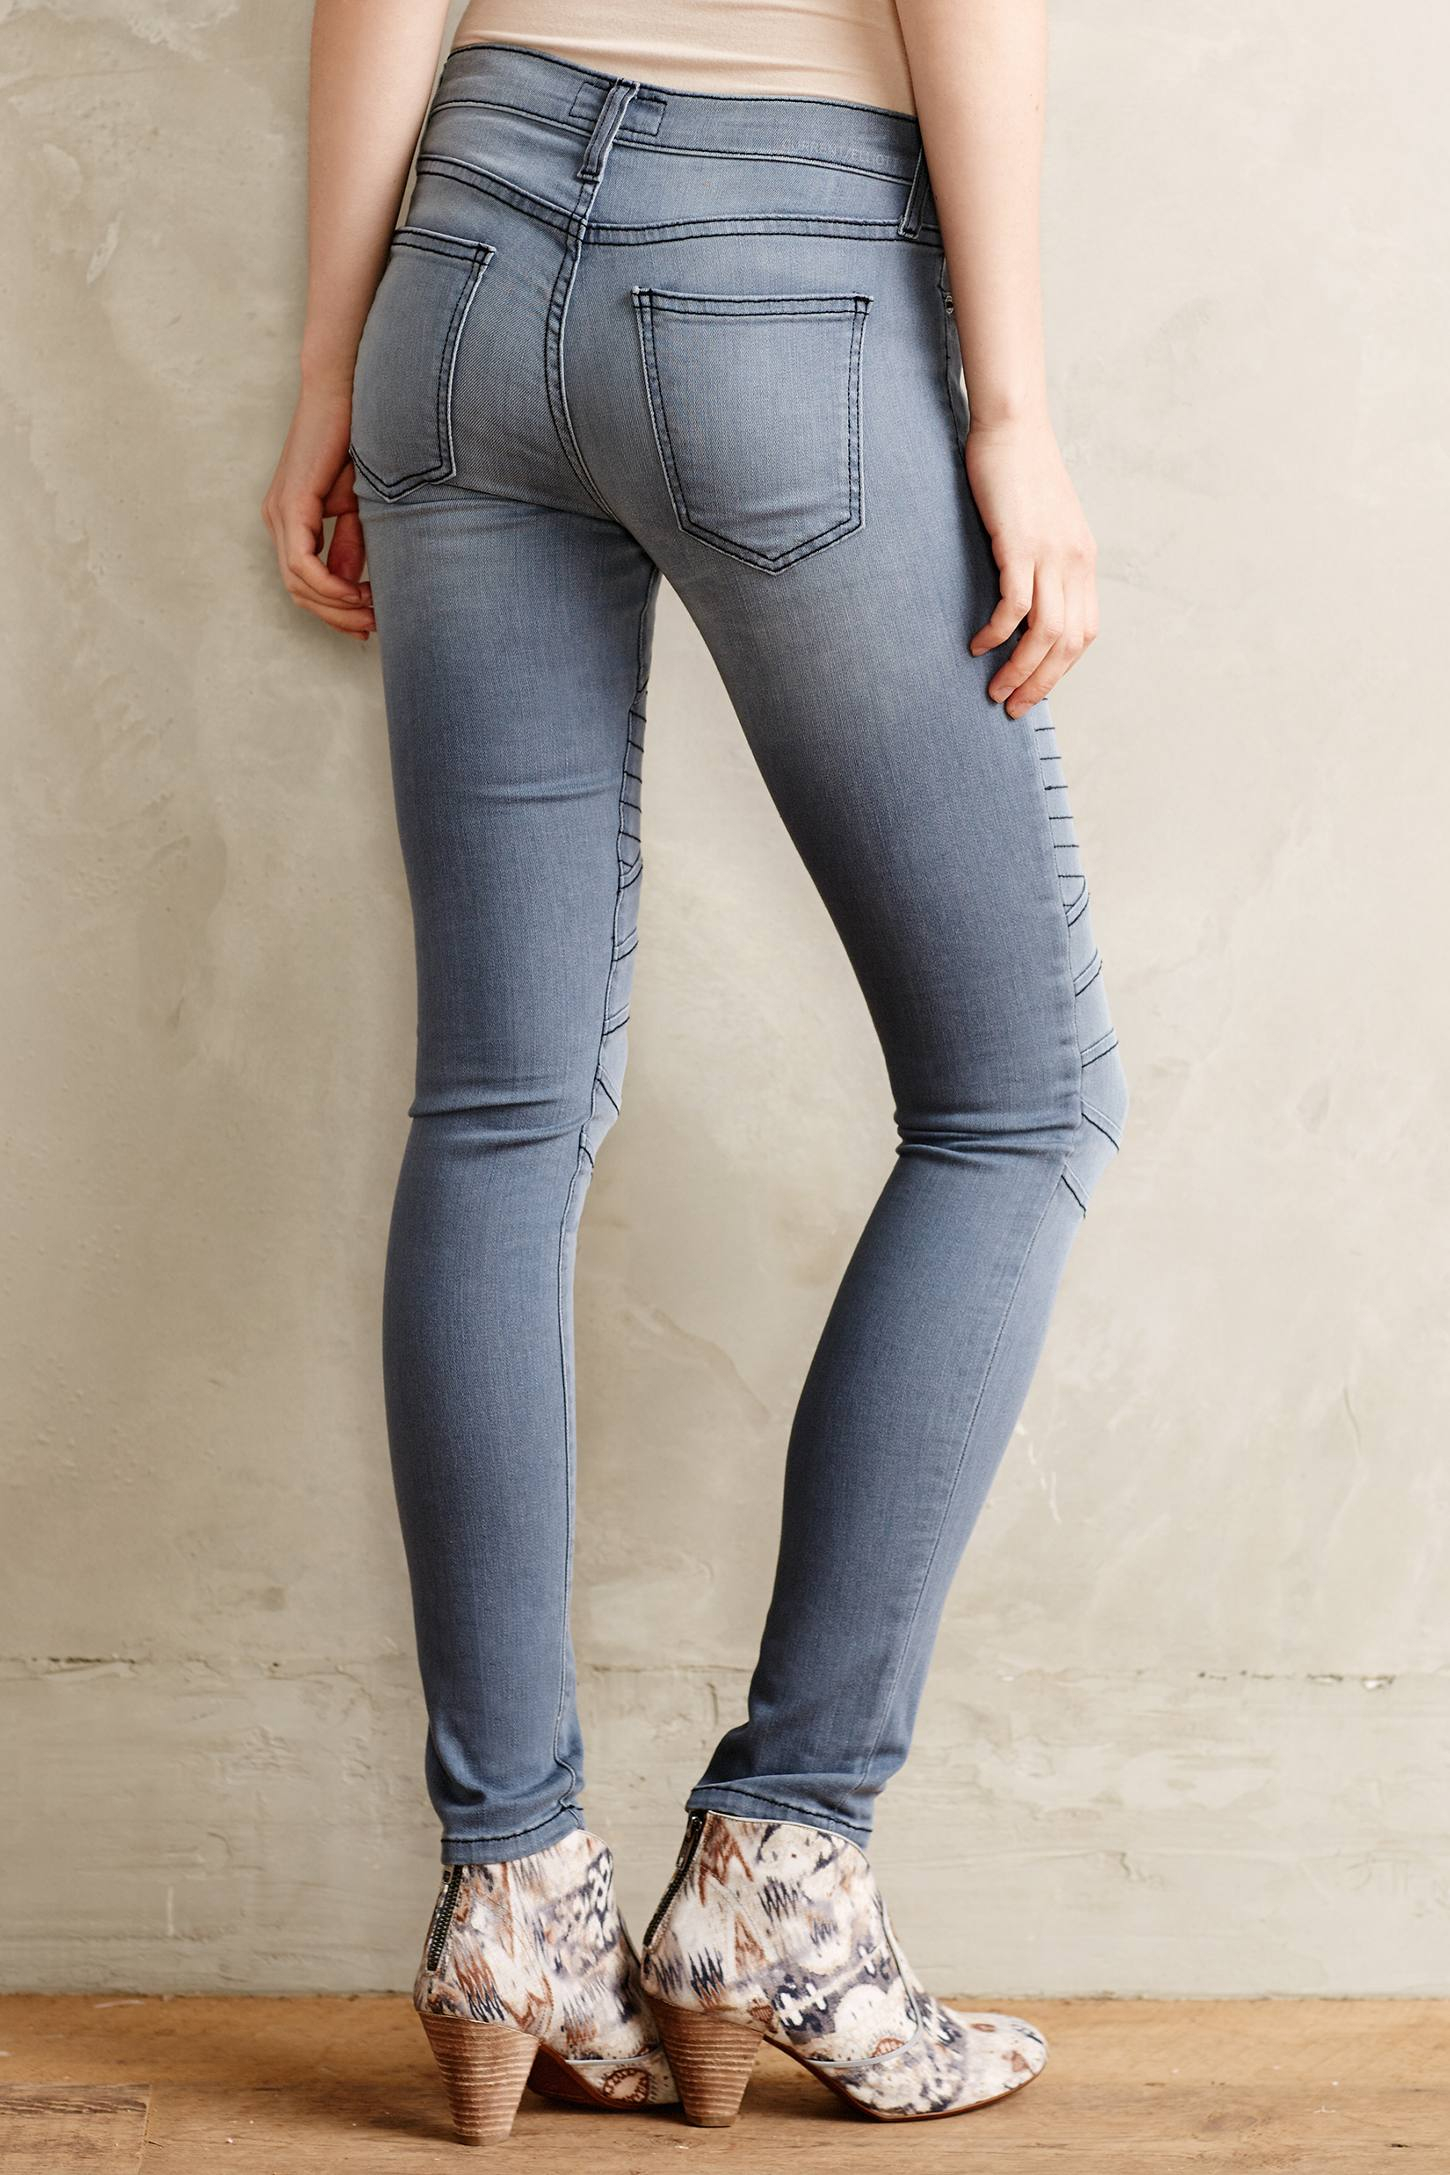 Lyst - Current/Elliott Moto Ankle Skinny Jeans in Gray